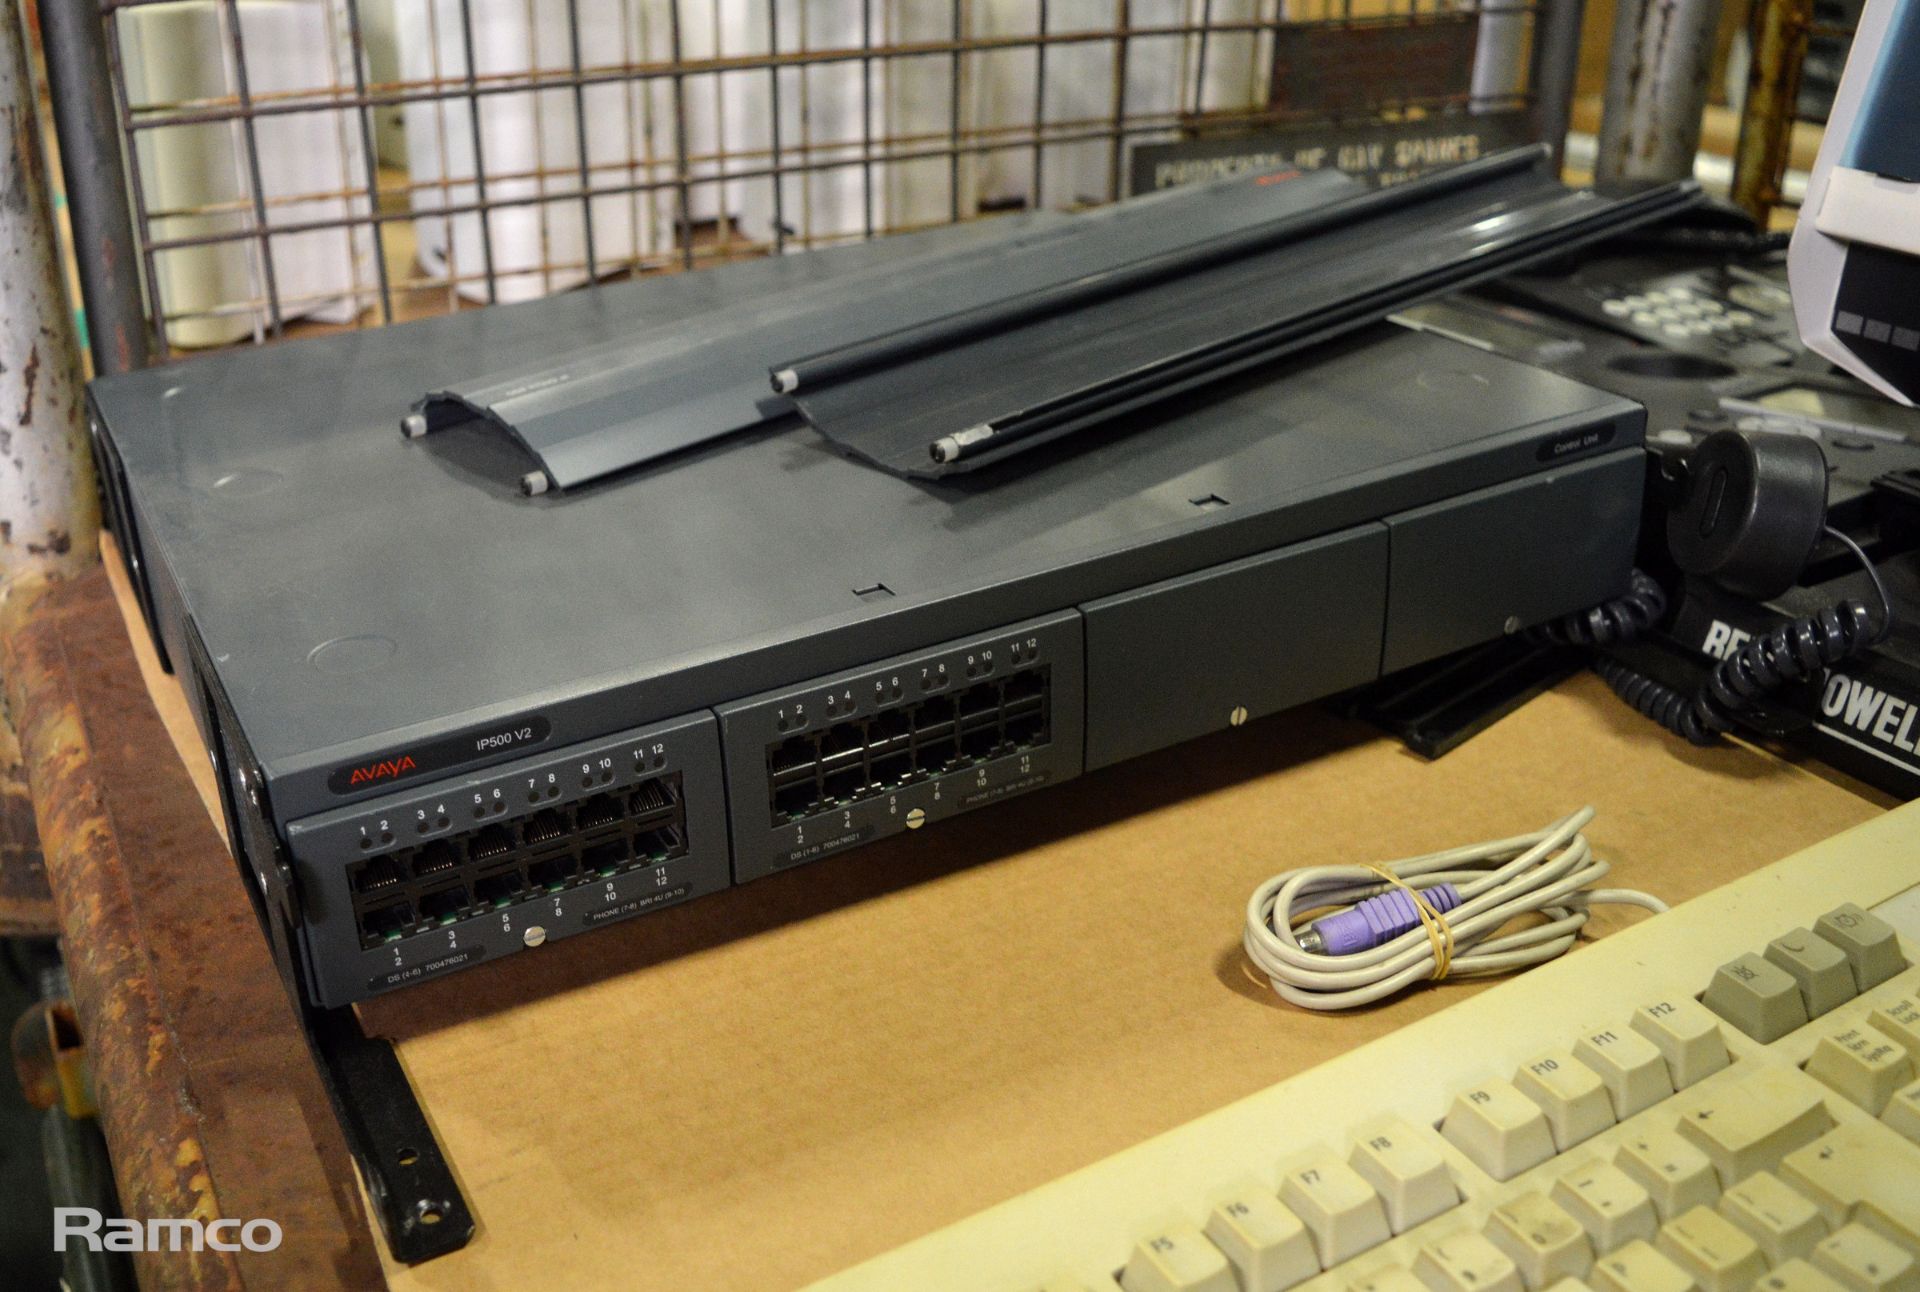 Bell & Howell microfiche reader, 2x Fax machines, desk phones, Avaya IP500 V2 network hub - Image 2 of 7